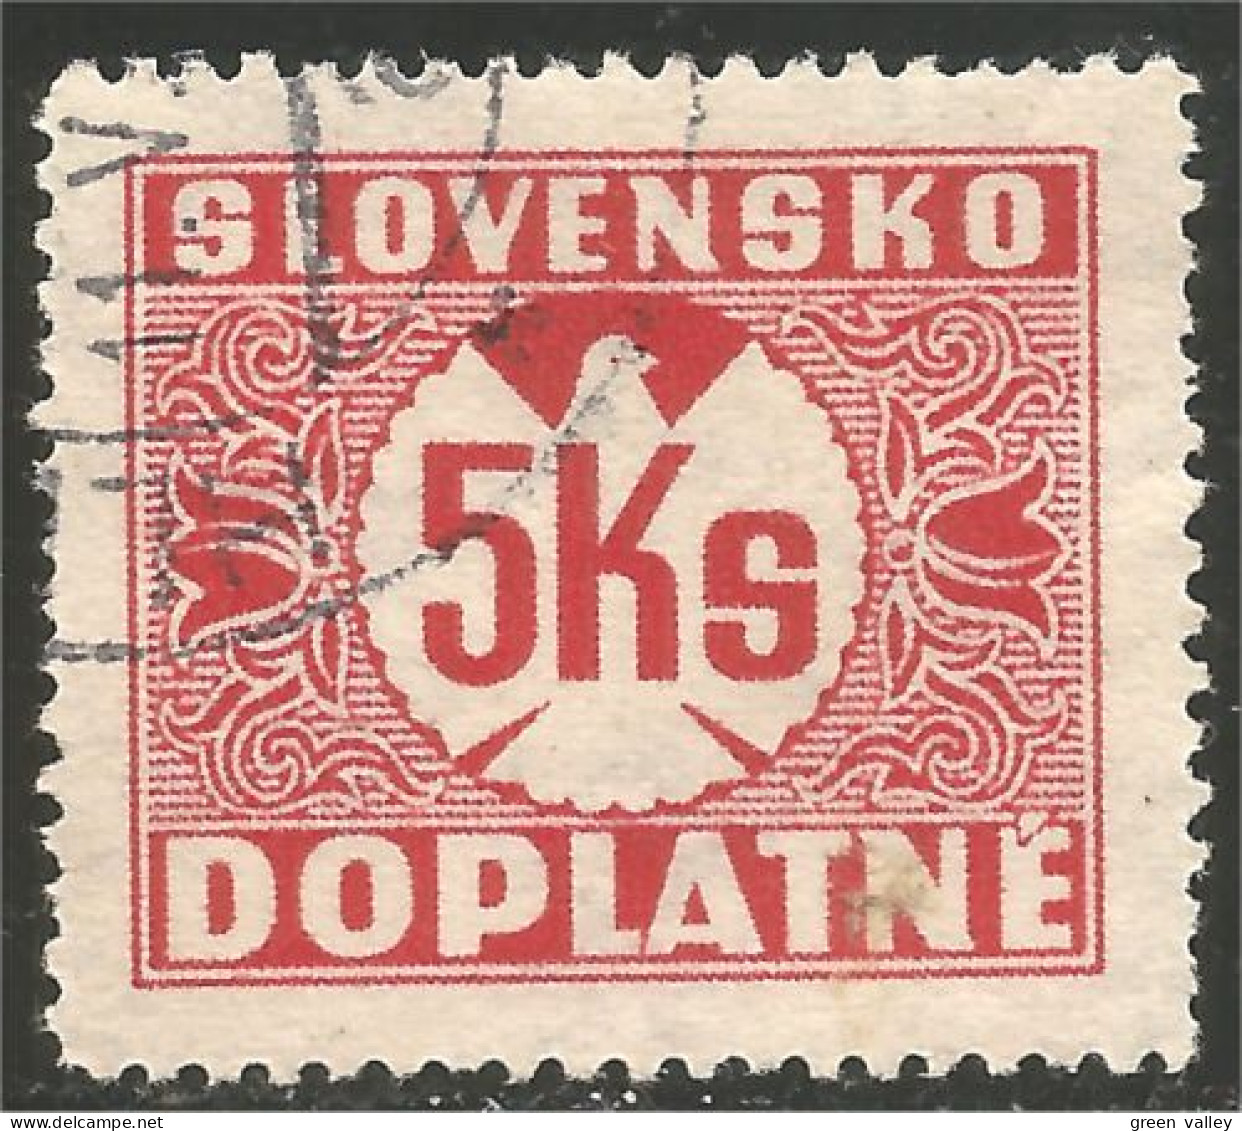 810 Slovensko Slovakia 1941 Postage Due Taxe 5 Ks Carmine (SLK-58c) - Usados